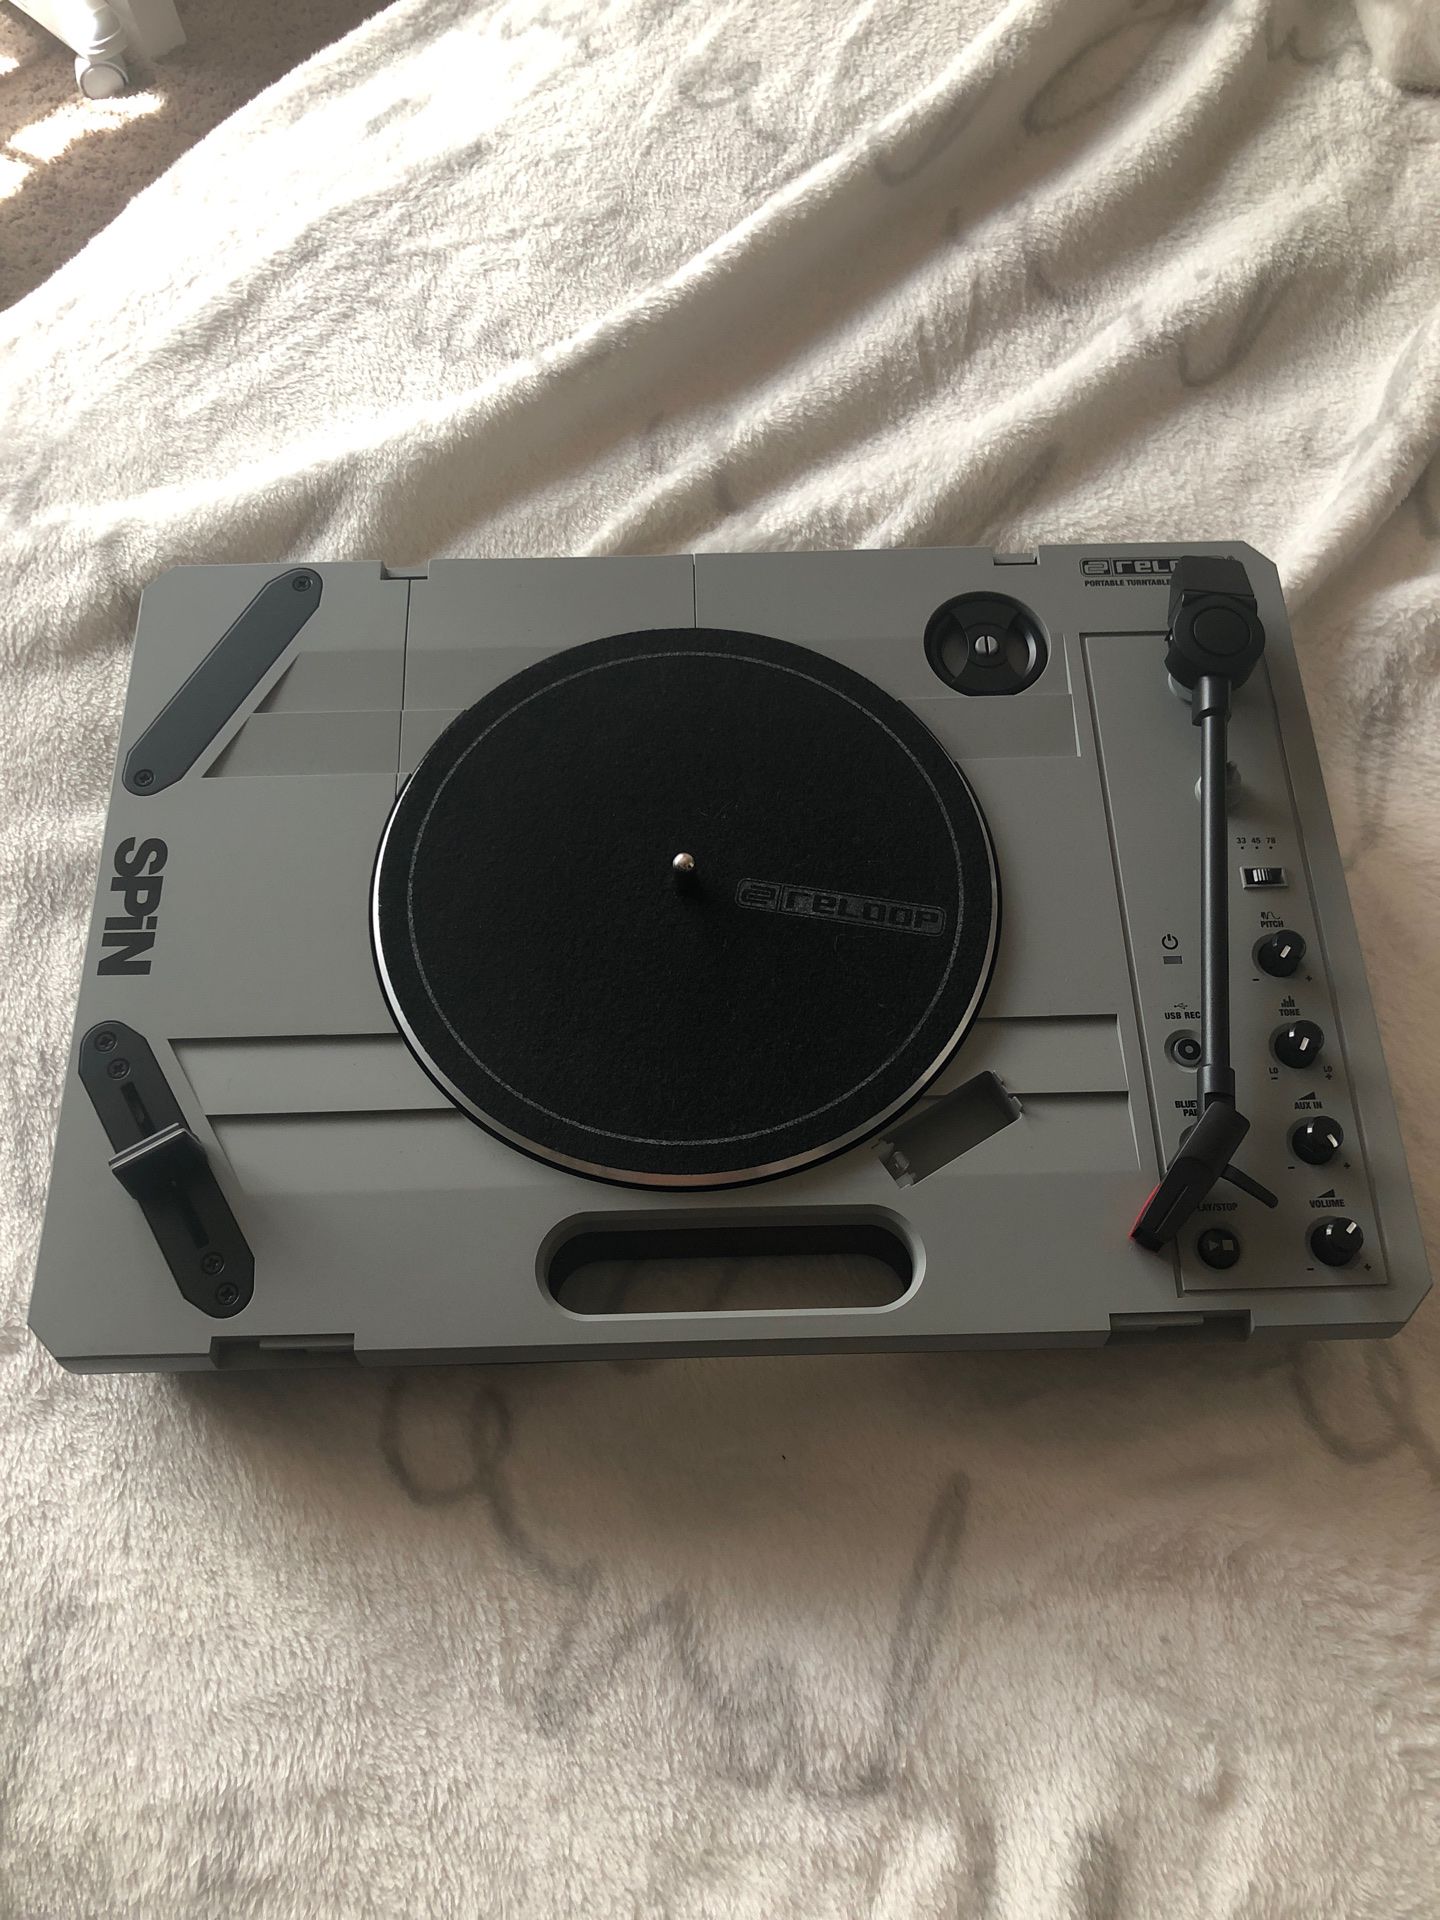 Portable DJ turntable